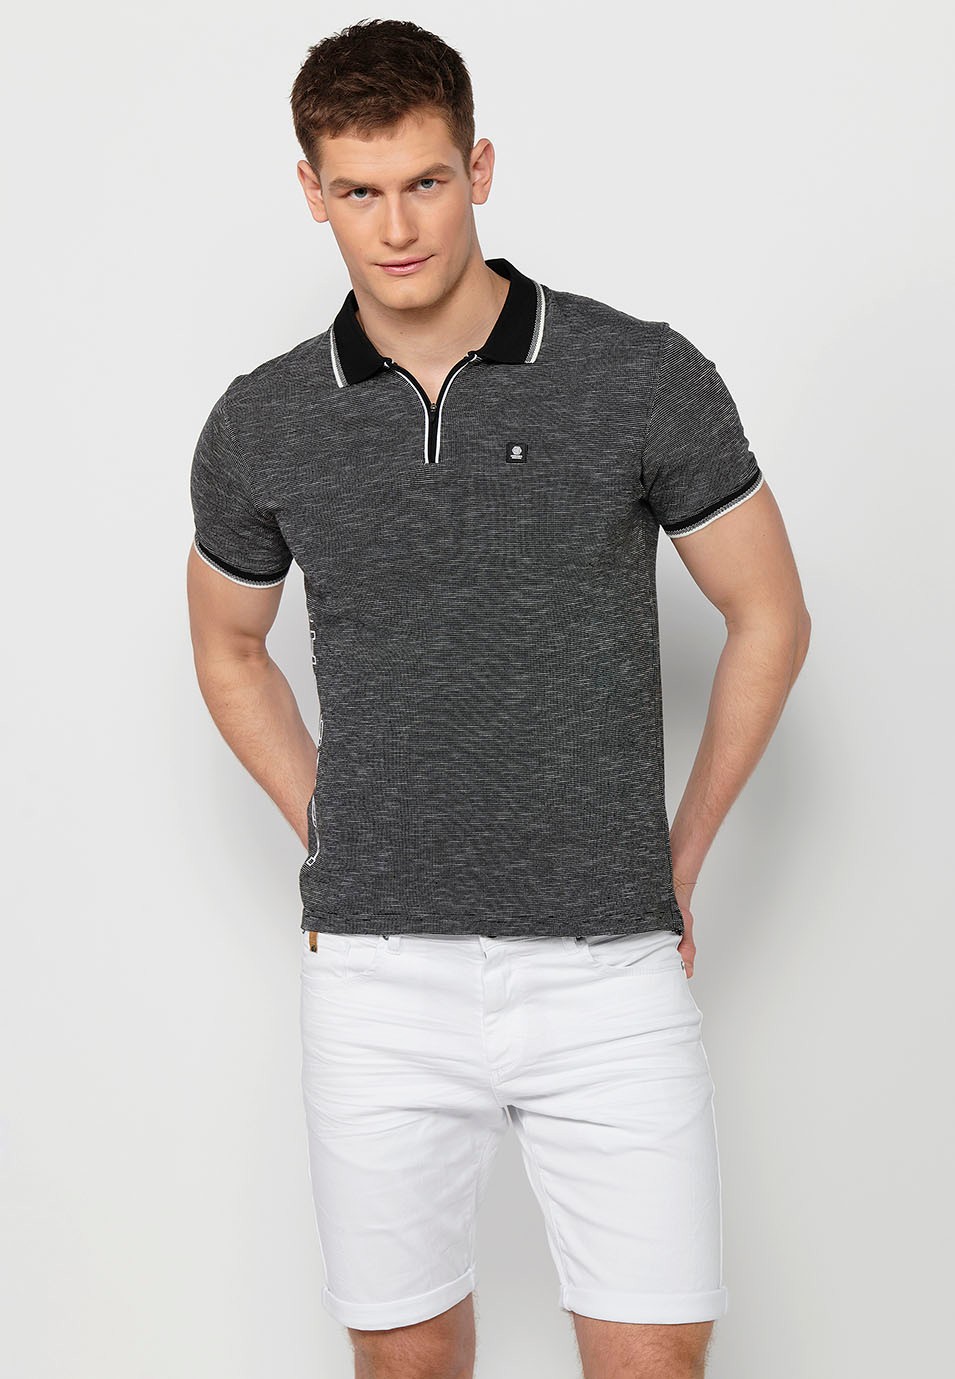 Black cotton short sleeve polo shirt for men